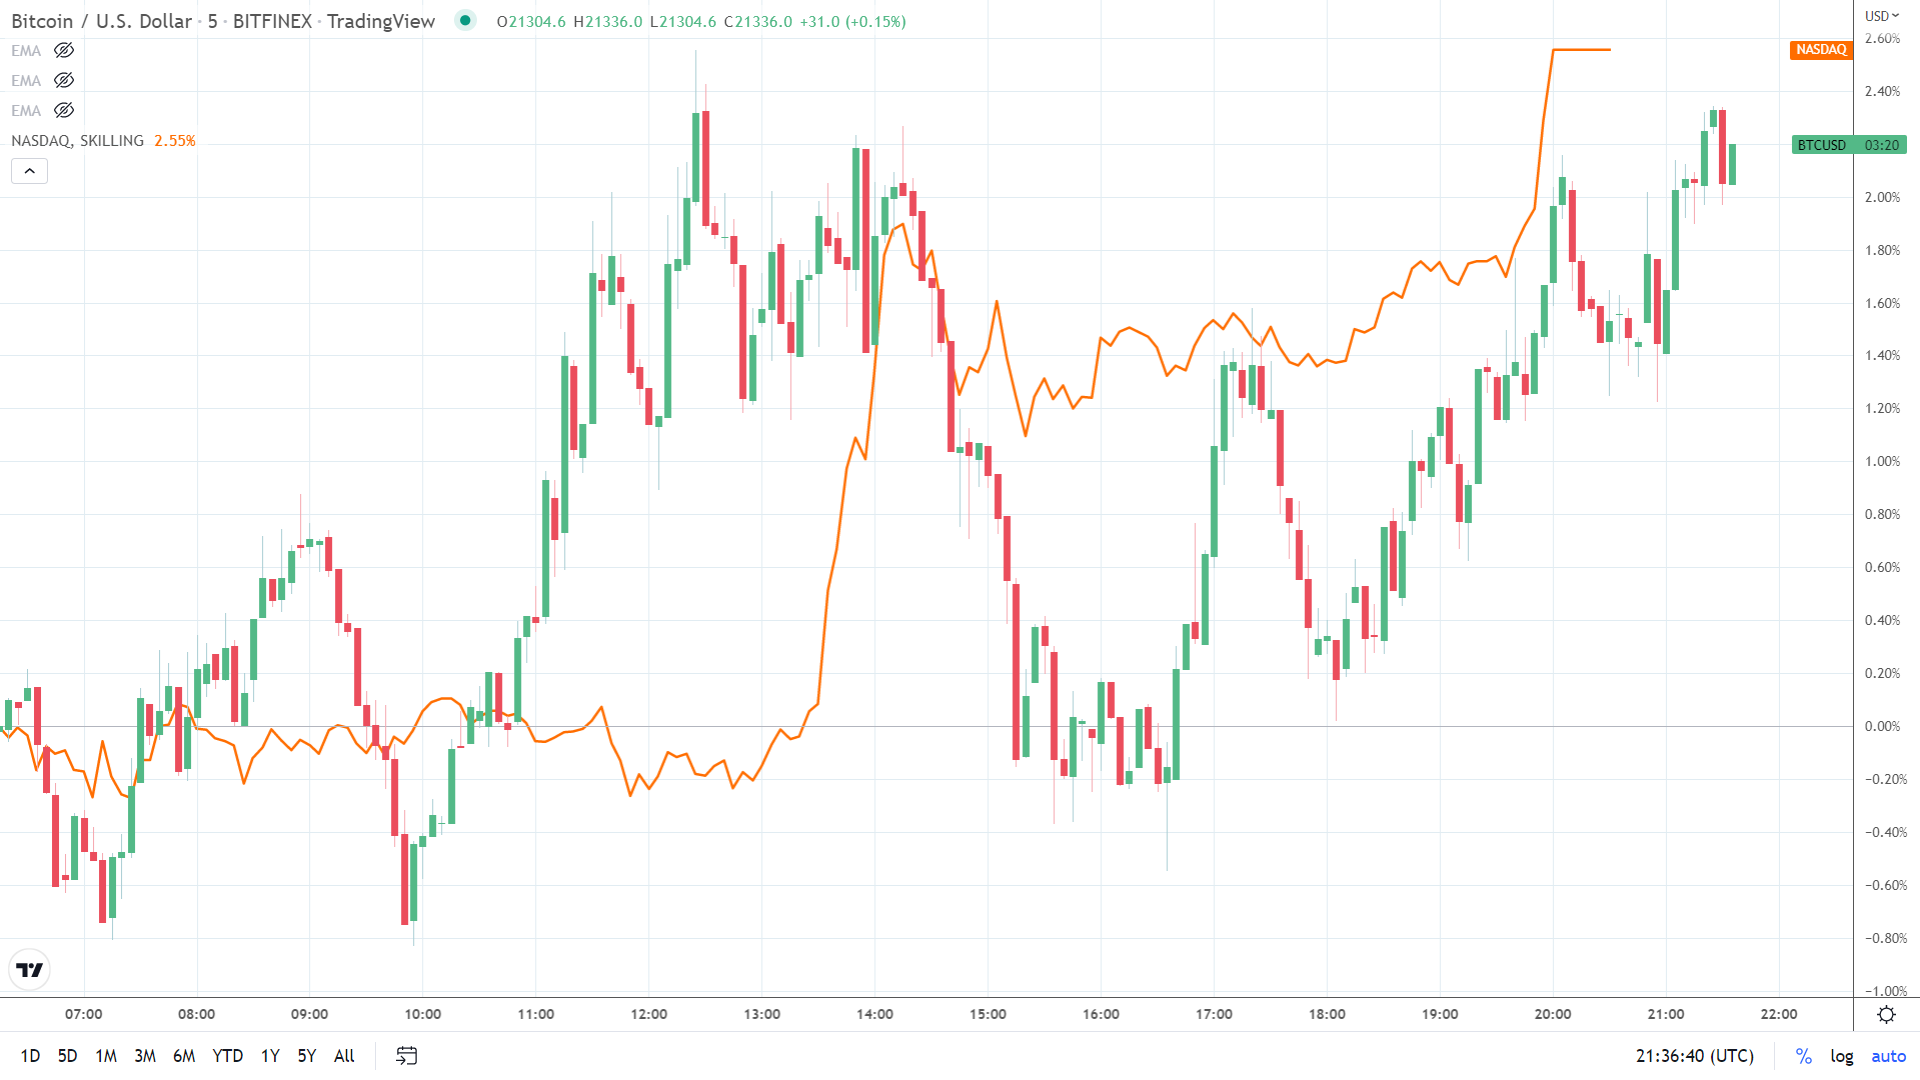 BTC - NASDAQ correlation